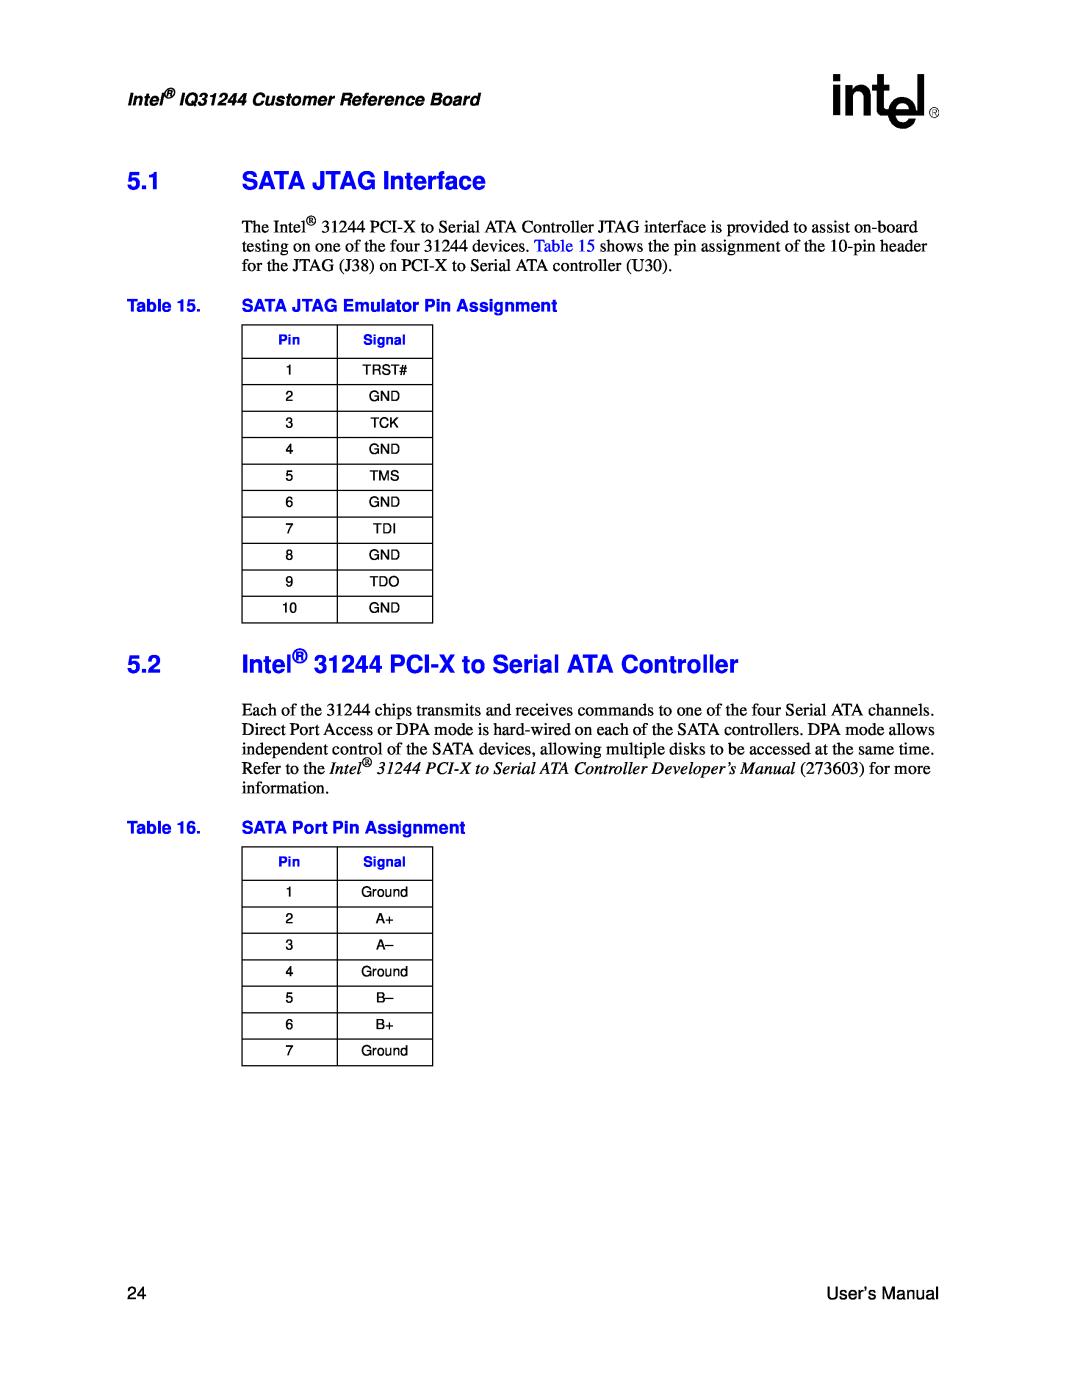 Intel IQ31244 5.1SATA JTAG Interface, 5.2Intel 31244 PCI-Xto Serial ATA Controller, SATA JTAG Emulator Pin Assignment 